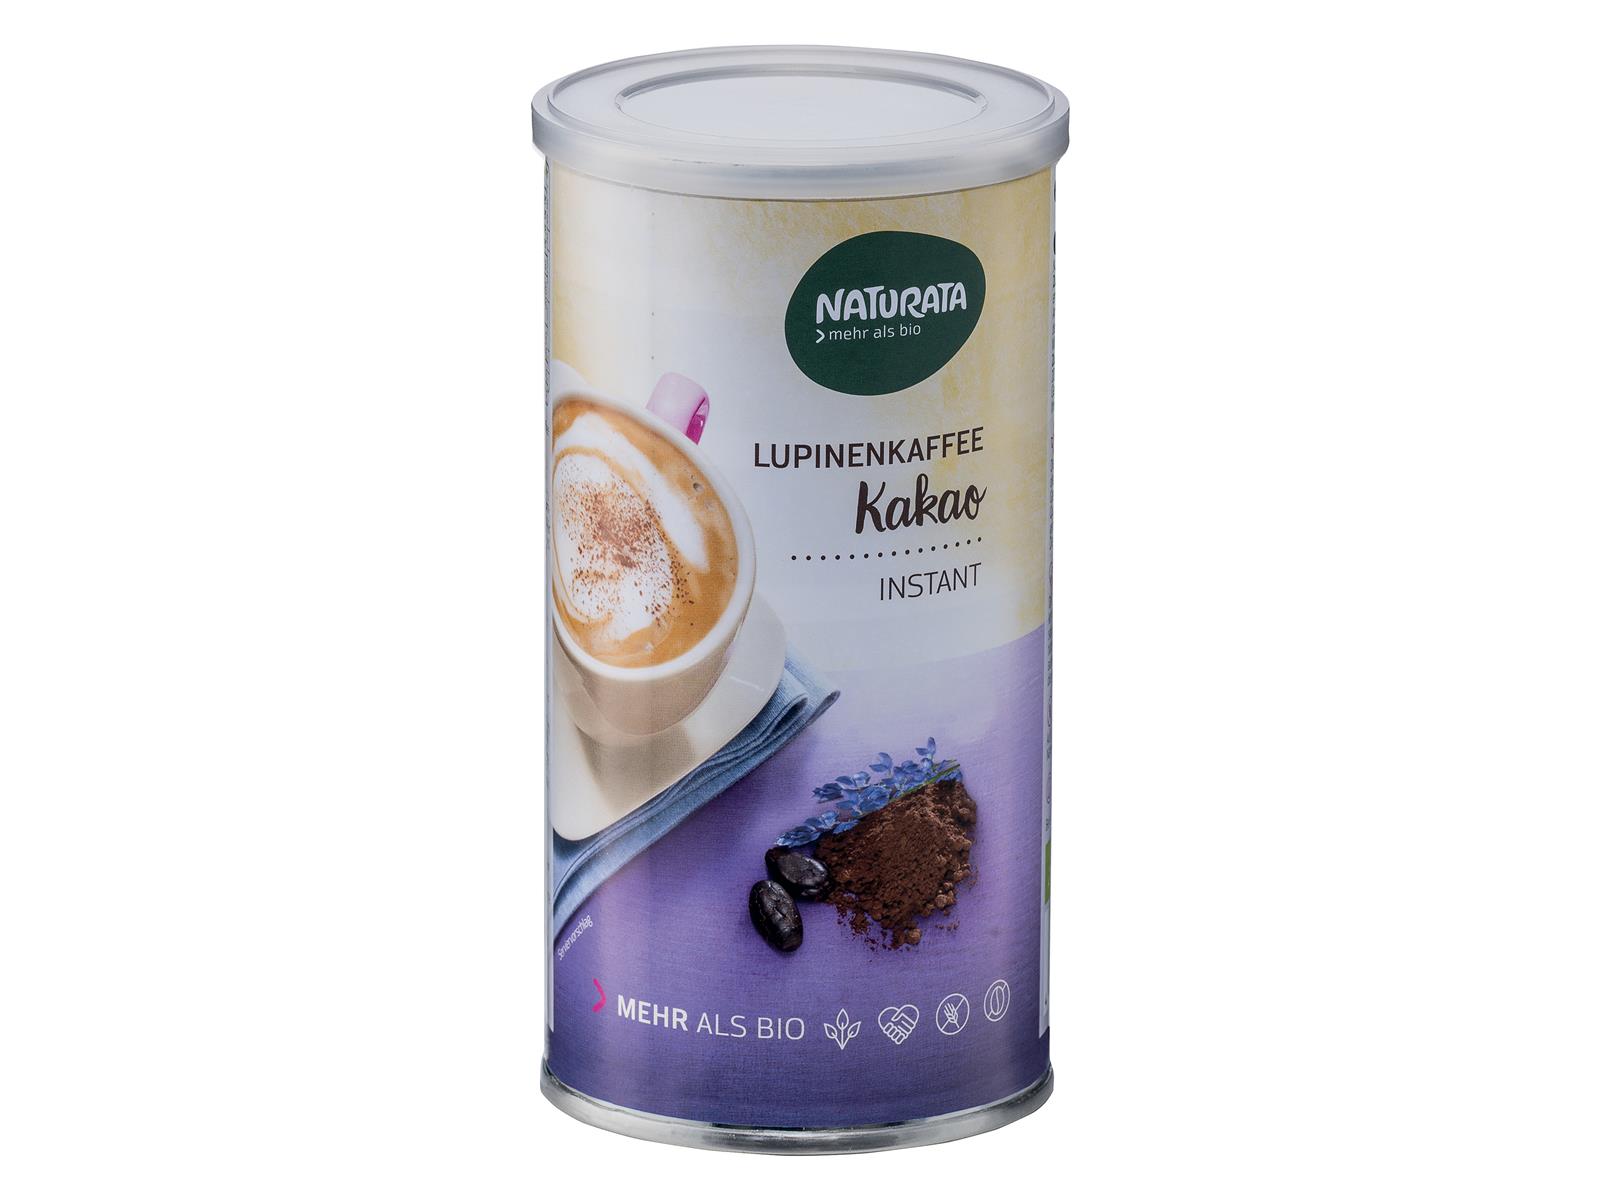 Naturata Lupinenkaffee Kakao, instant 175 g